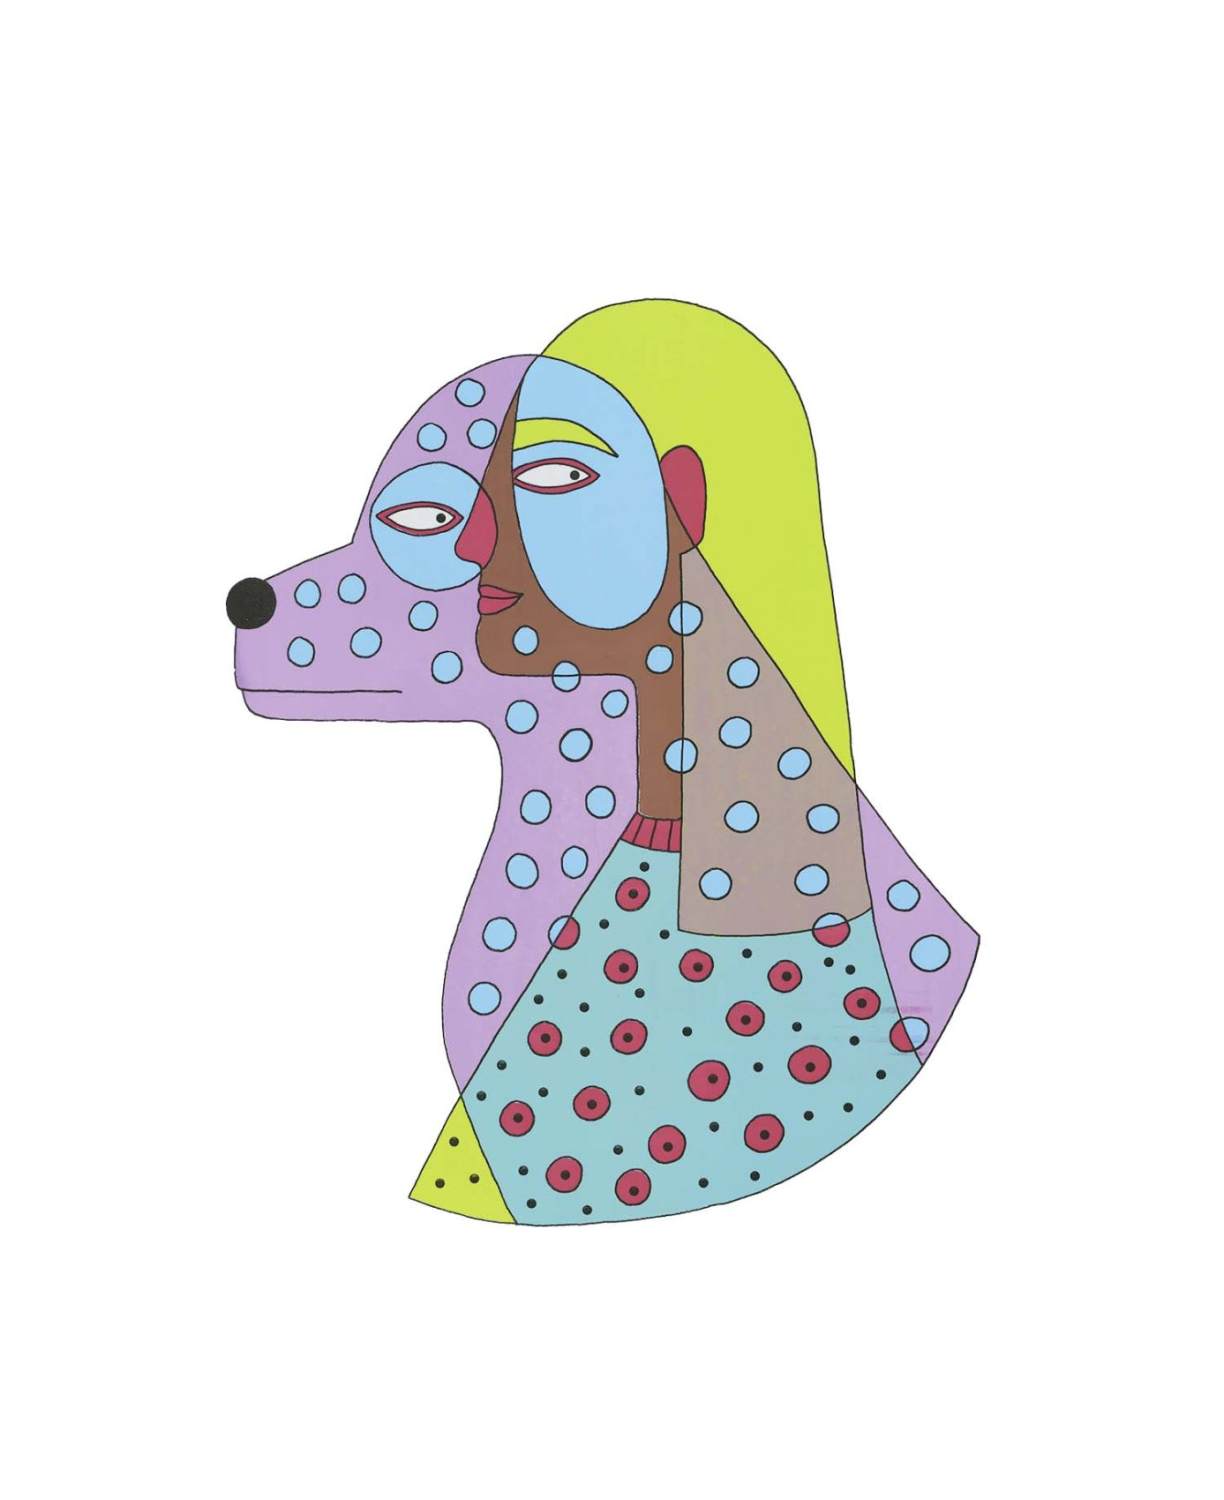 yonina-rollack-friendship-silk-screen-print-dog-portrait-playful-art-online-art-gallery